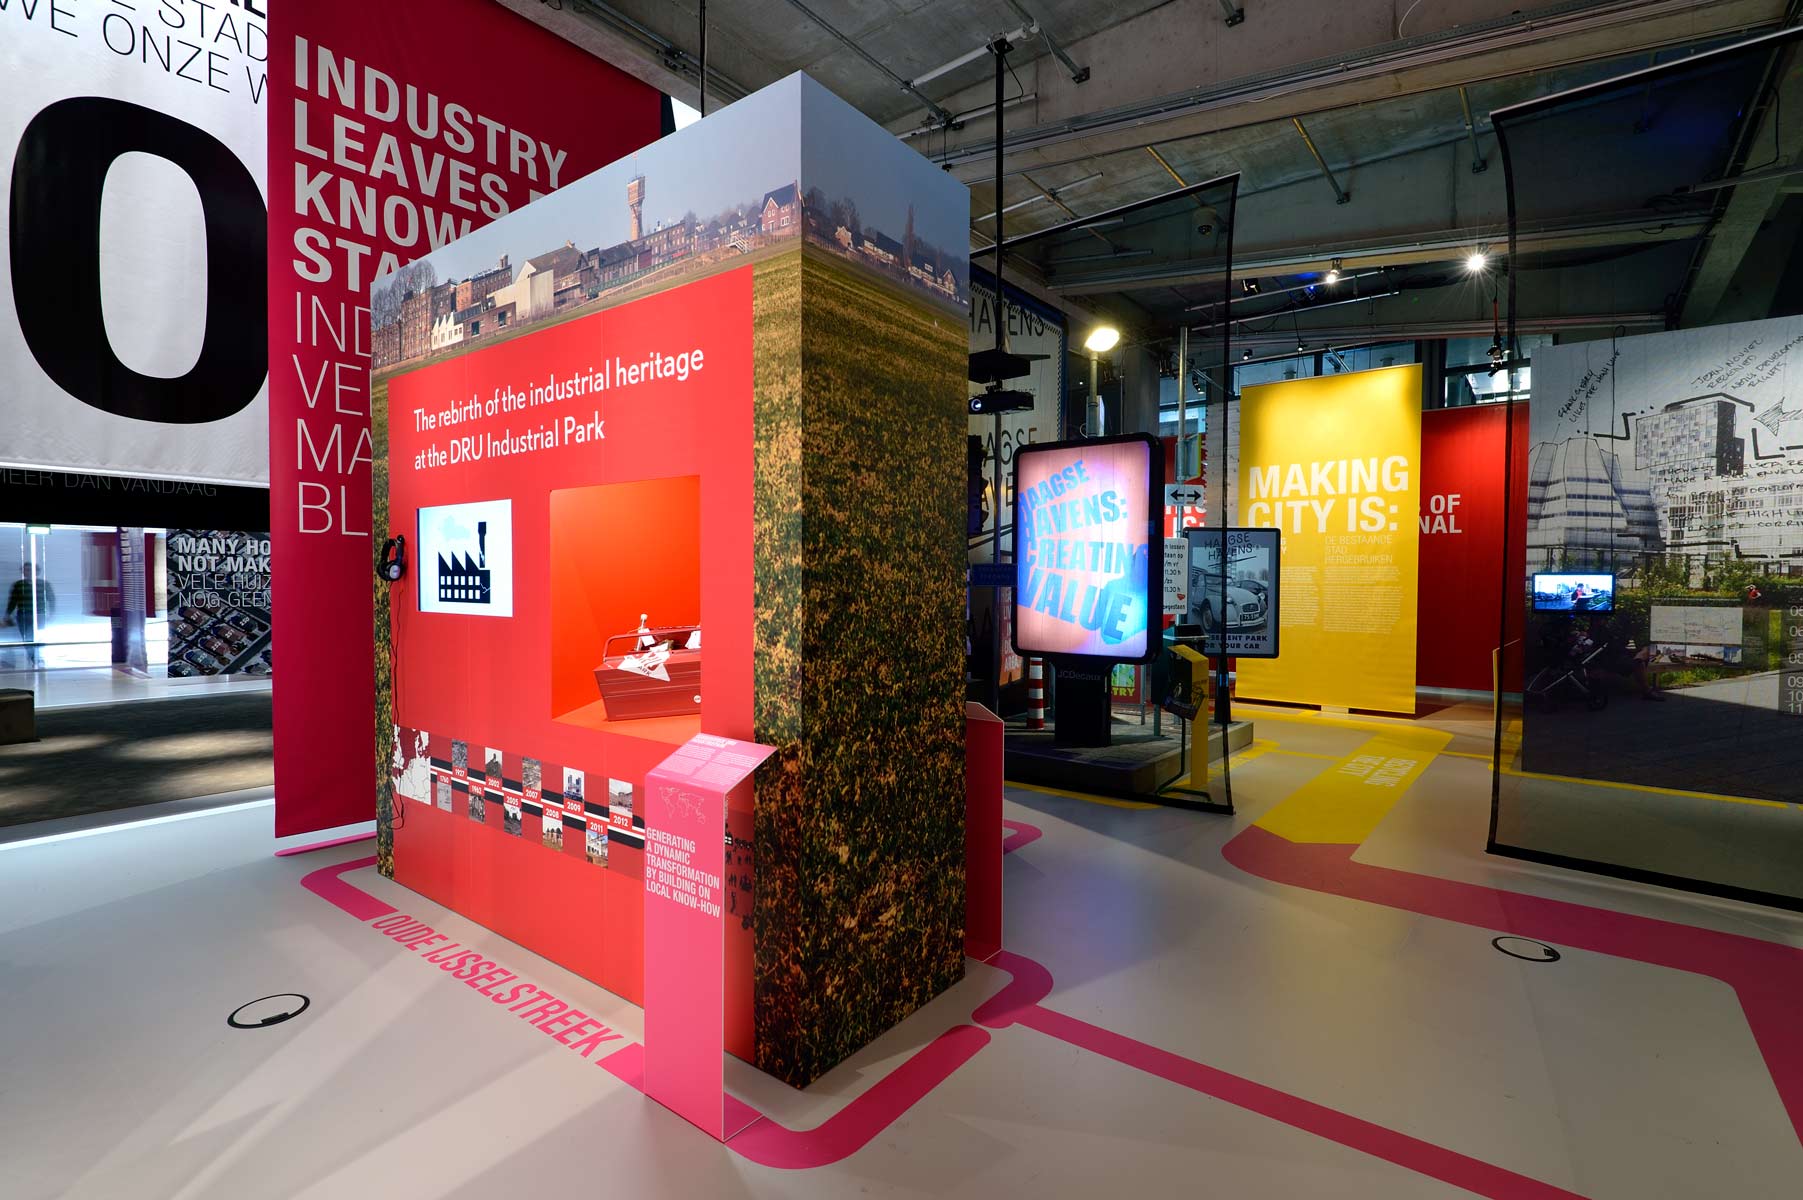 'Making City' - tentoonstelling IABR 2012 - Nederlands Architectuurinstituut